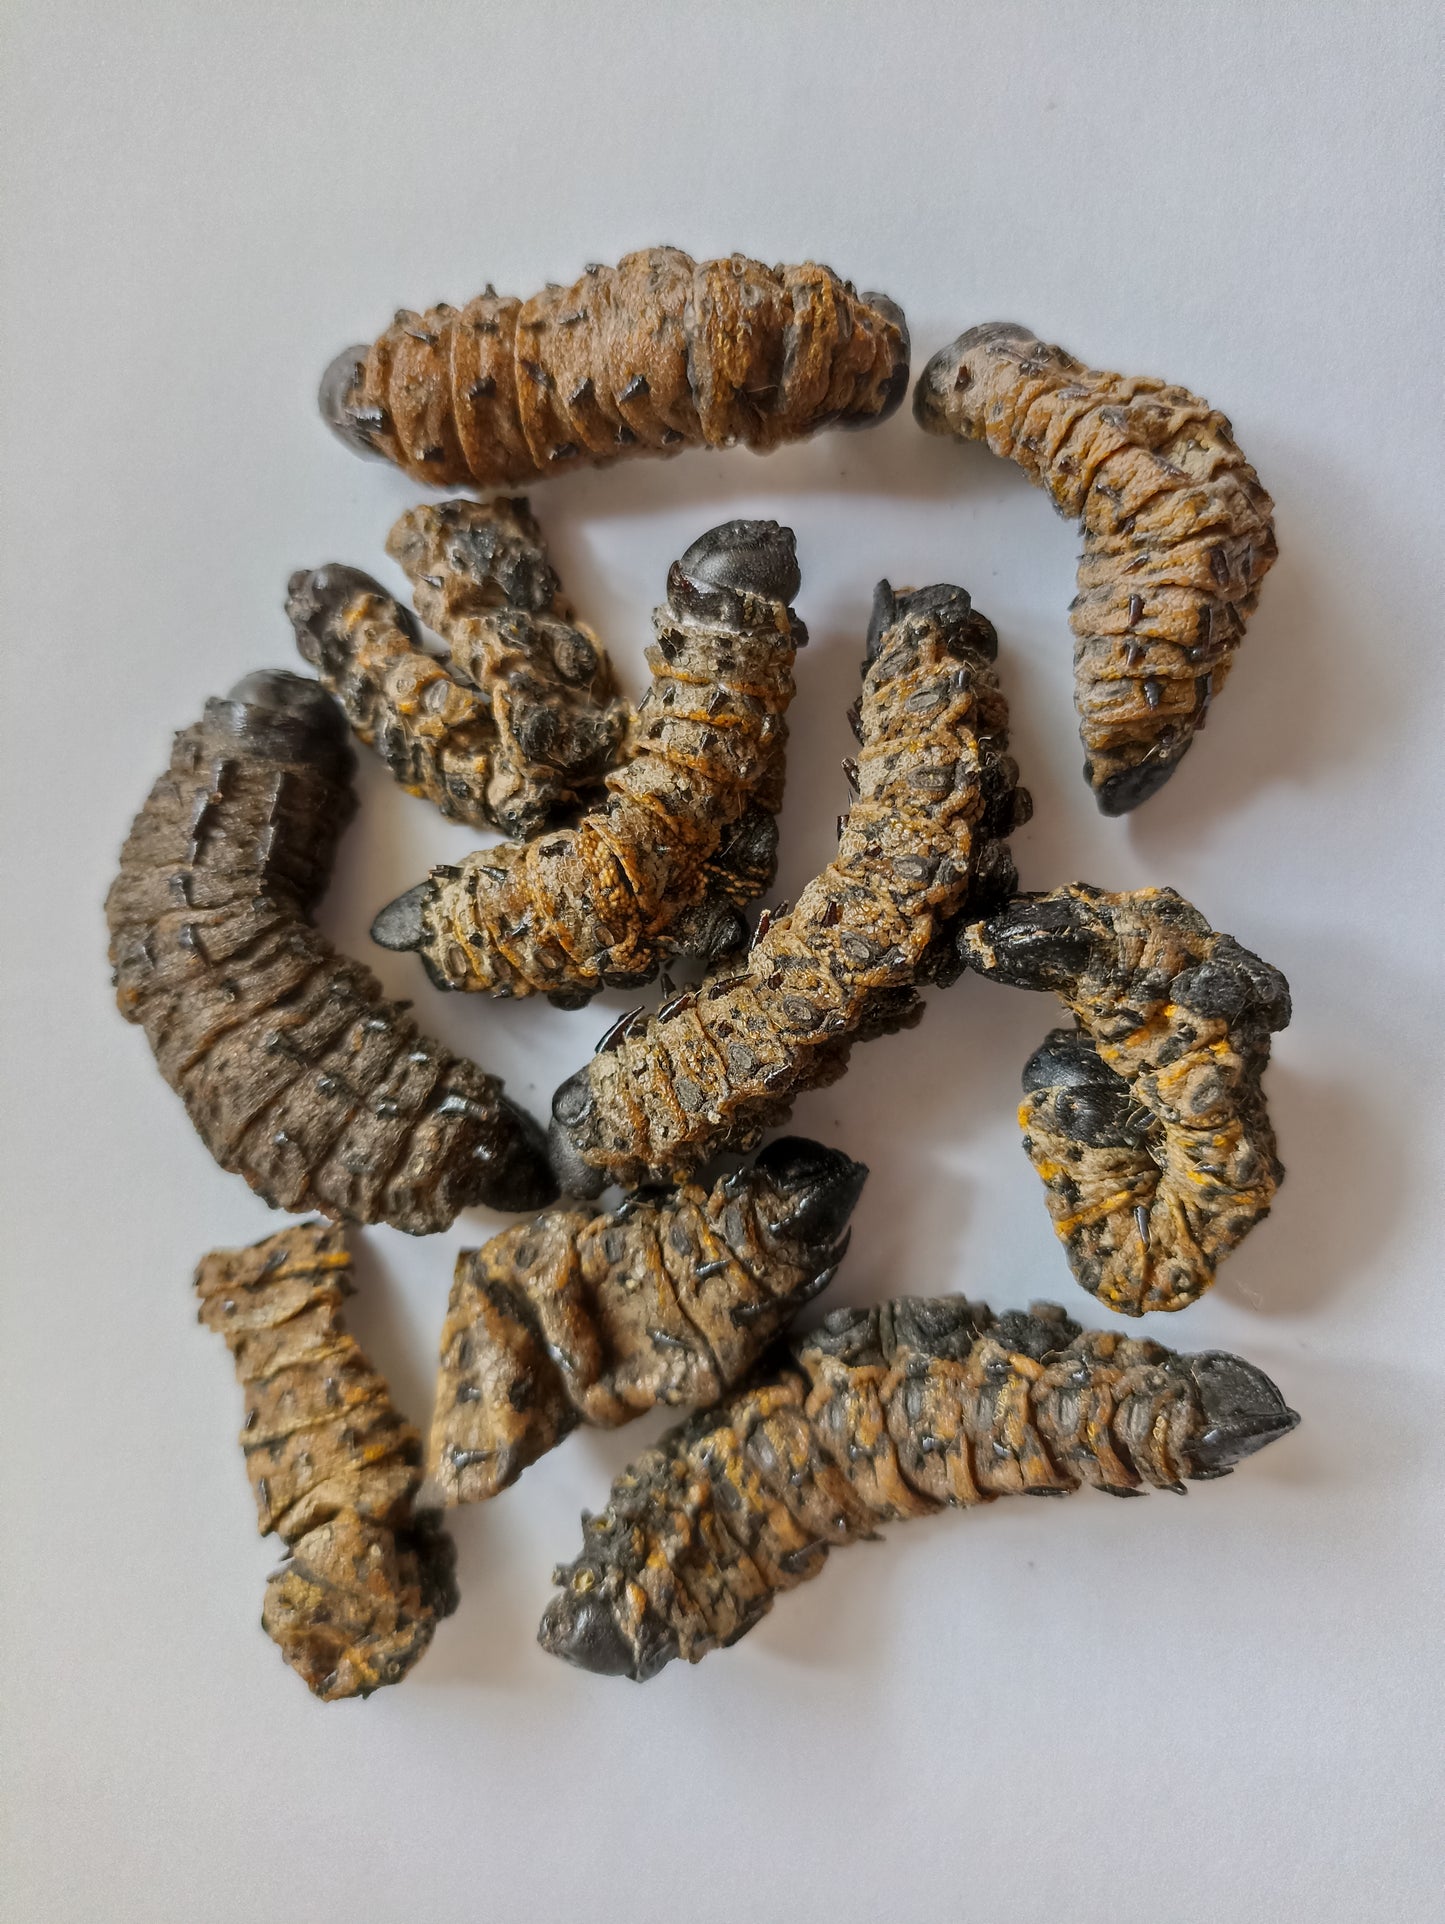 Mopane Worms 50g - Mischief Pet Products